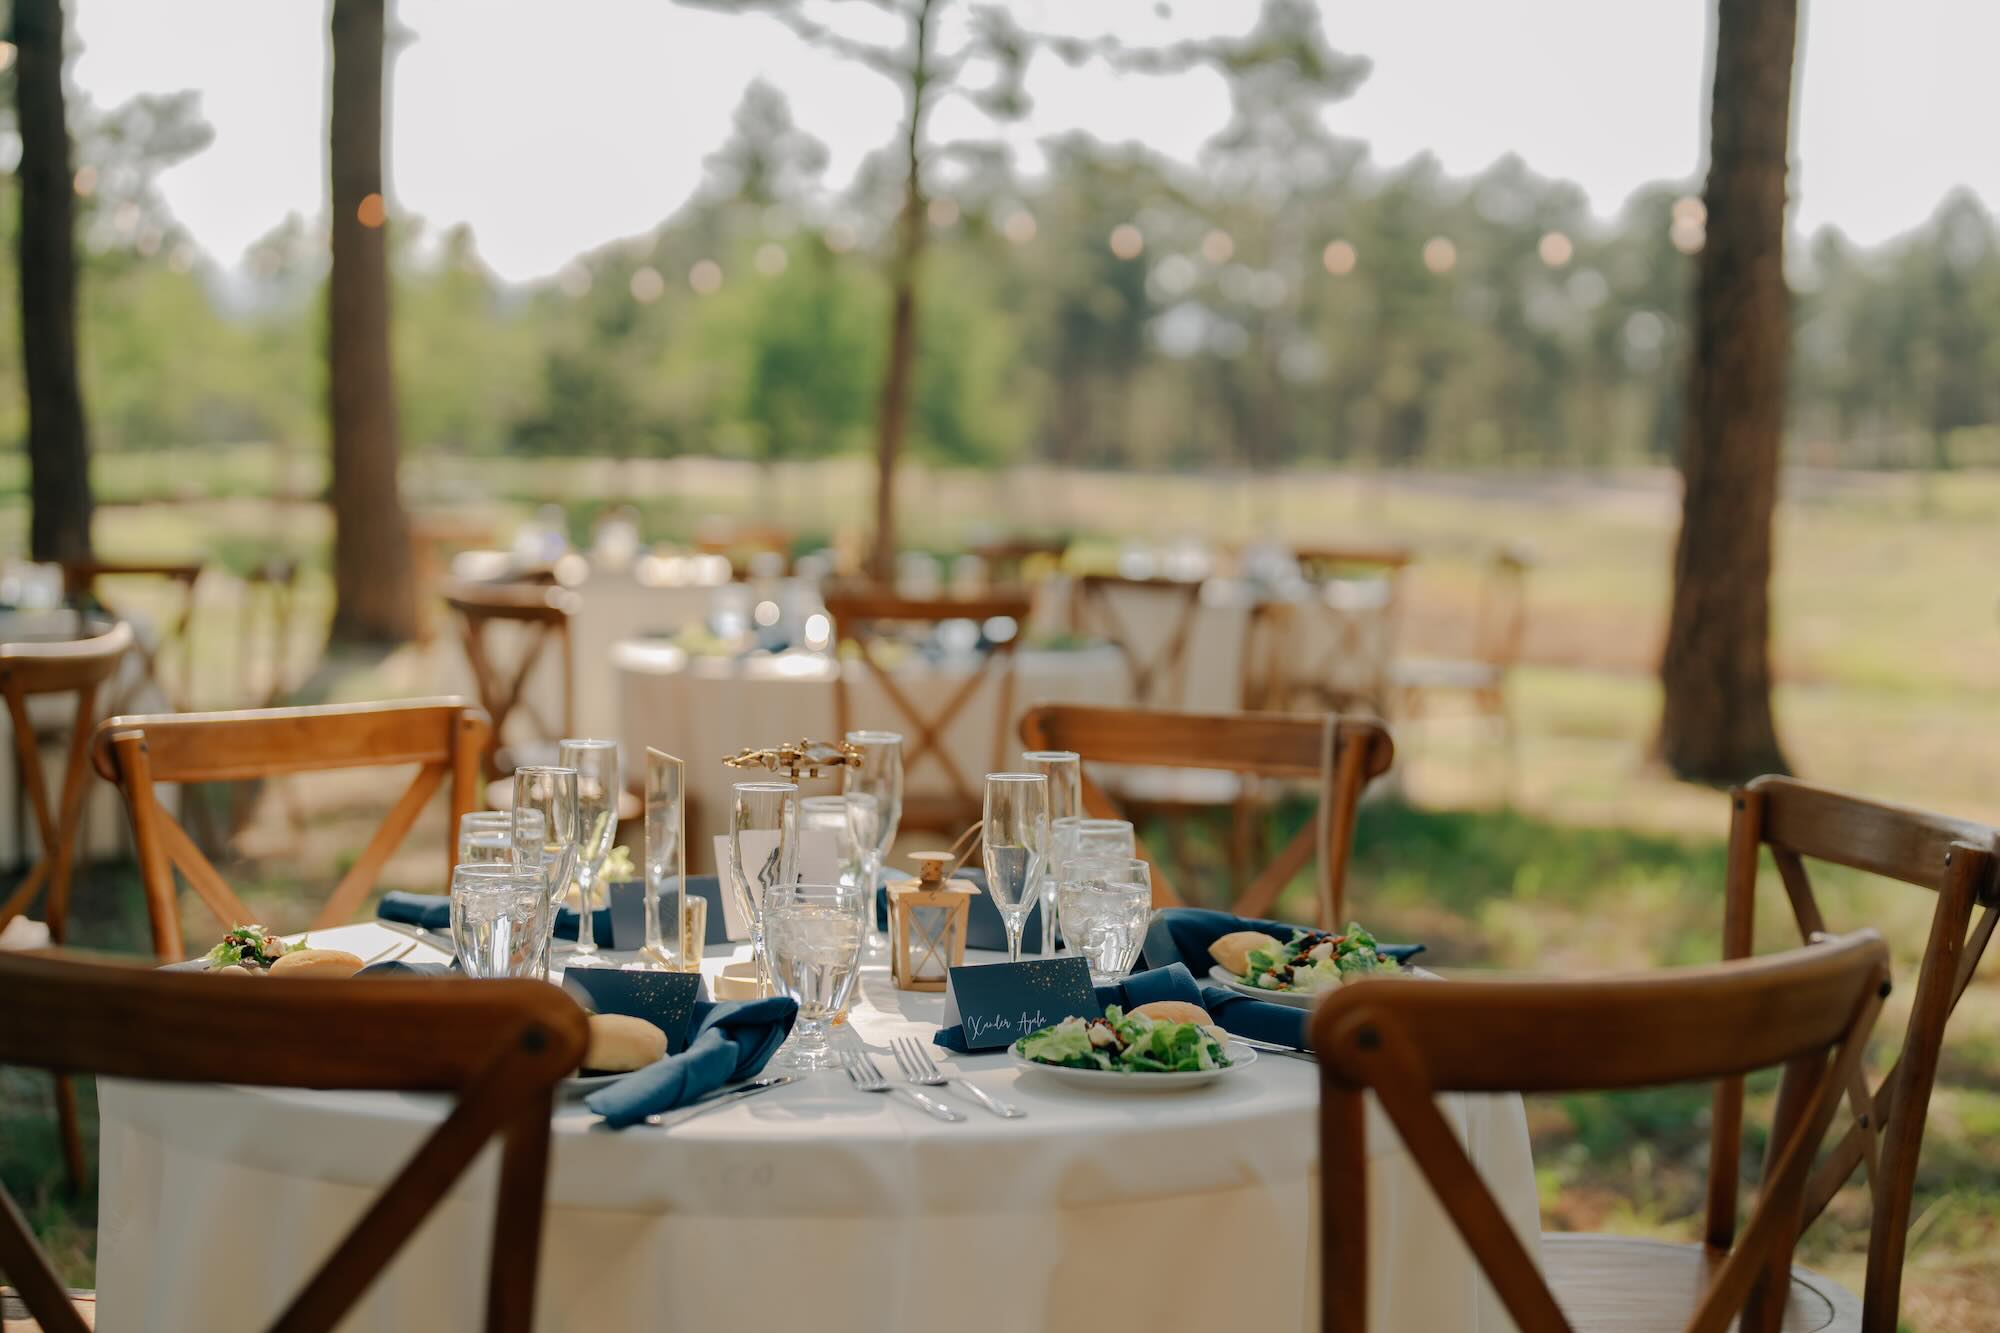 How to find a wedding venue - indoor/outdoor locations